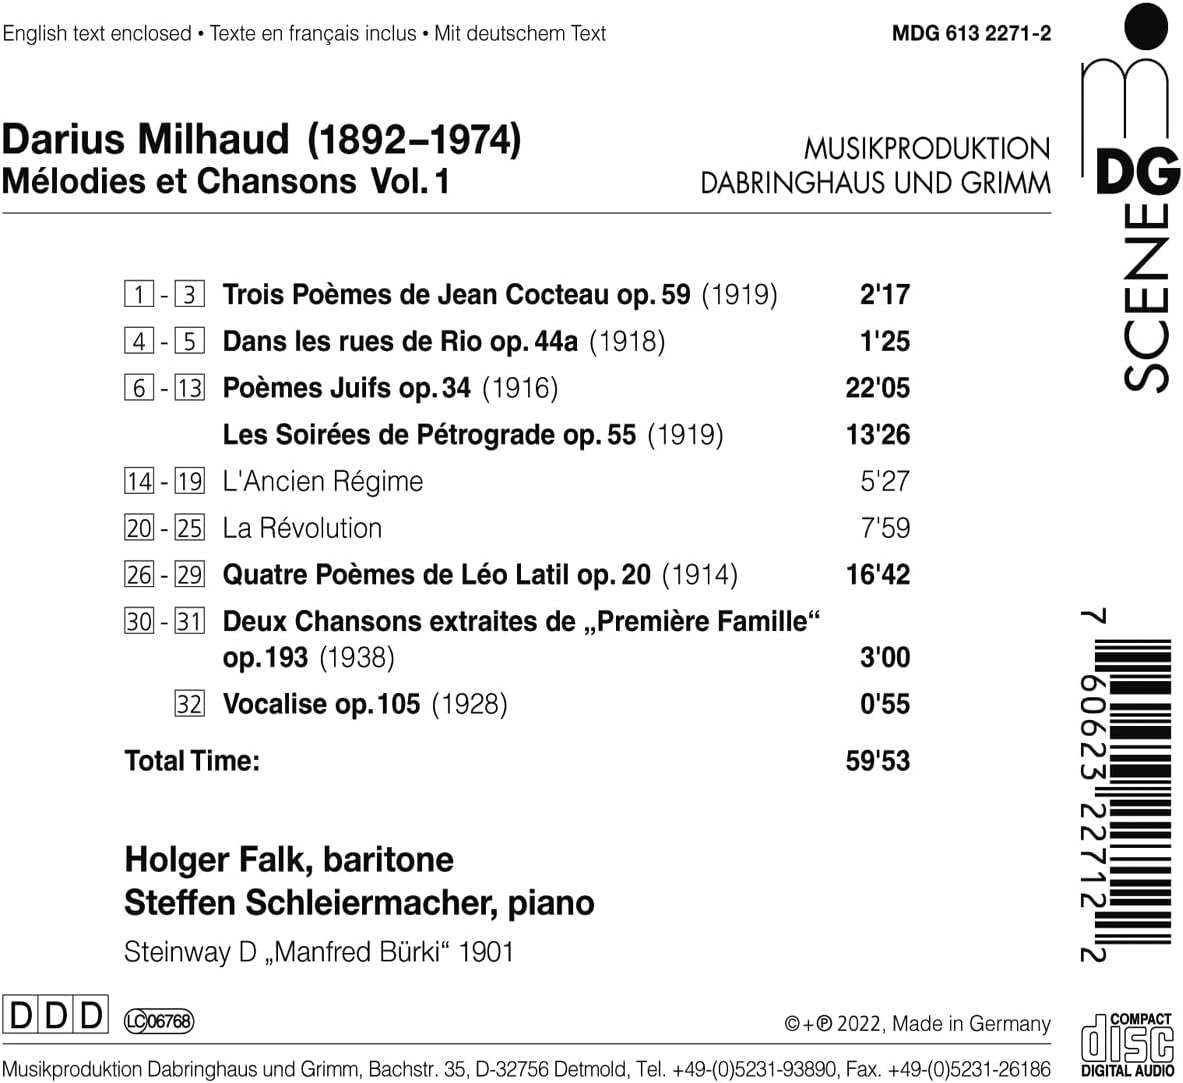 Holger Falk / Steffen Scheiermacher 미요: 가곡과 샹송 1집 - ‘페트로그라드의 밤’, ‘장 콕토의 세 개의 시’, ‘유대인의 시’ 등 (Milhaud: Melodies Et Chansons Vol. 1) 